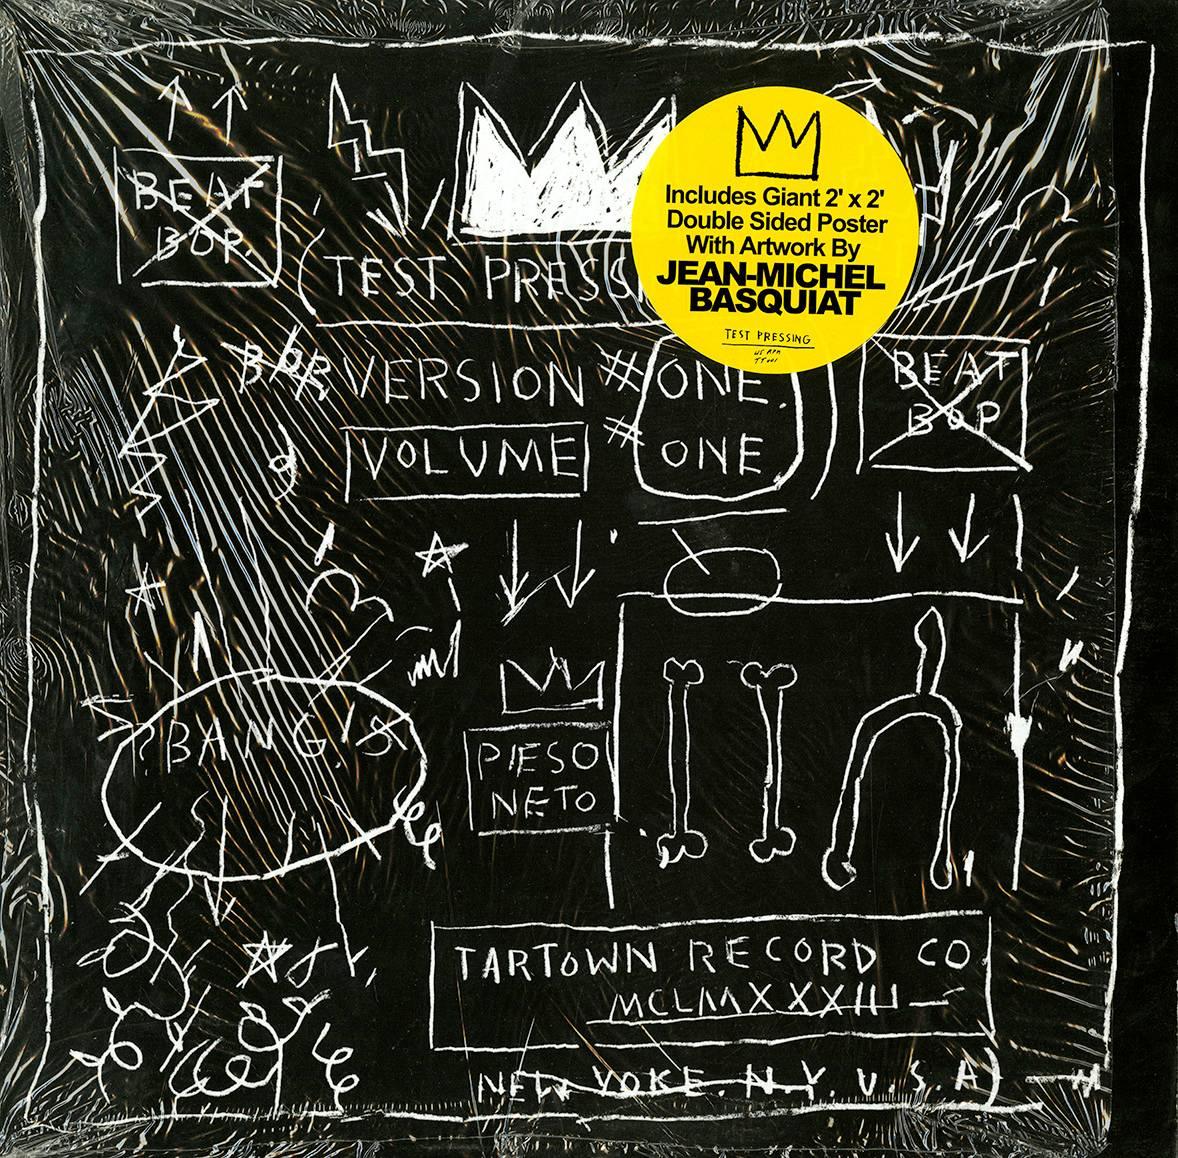 Basquiat Beat Bop record art and poster (Basquiat album art)  - Print by after Jean-Michel Basquiat